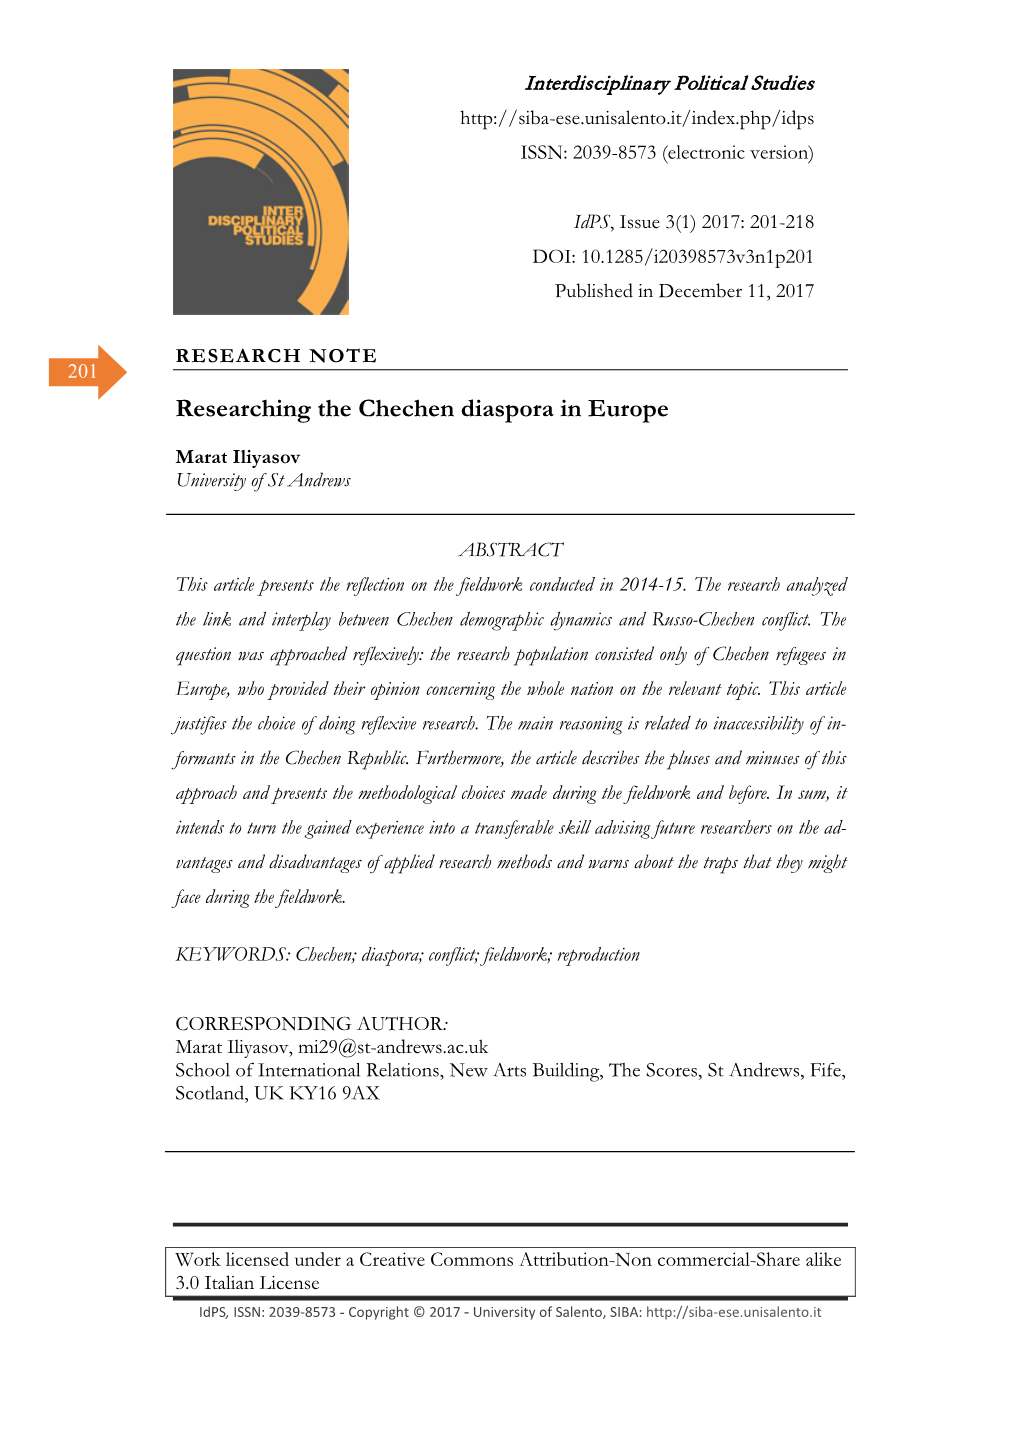 Researching the Chechen Diaspora in Europe